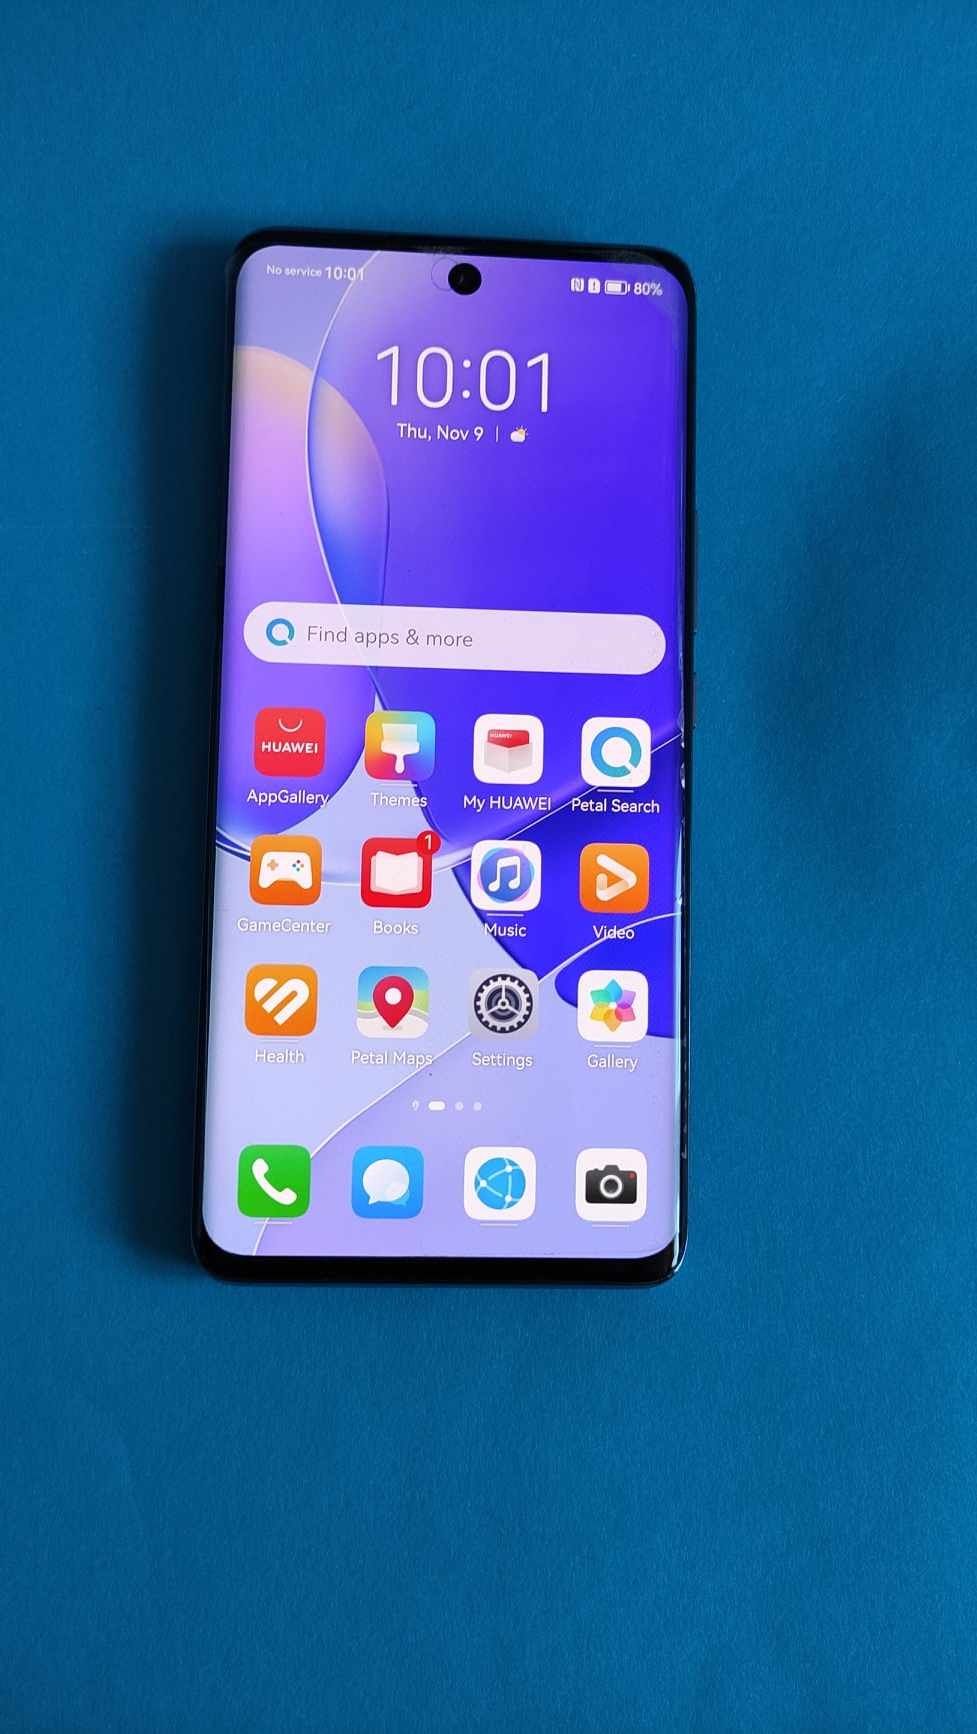 Telefon Huawei Nova 9 na gwarancji